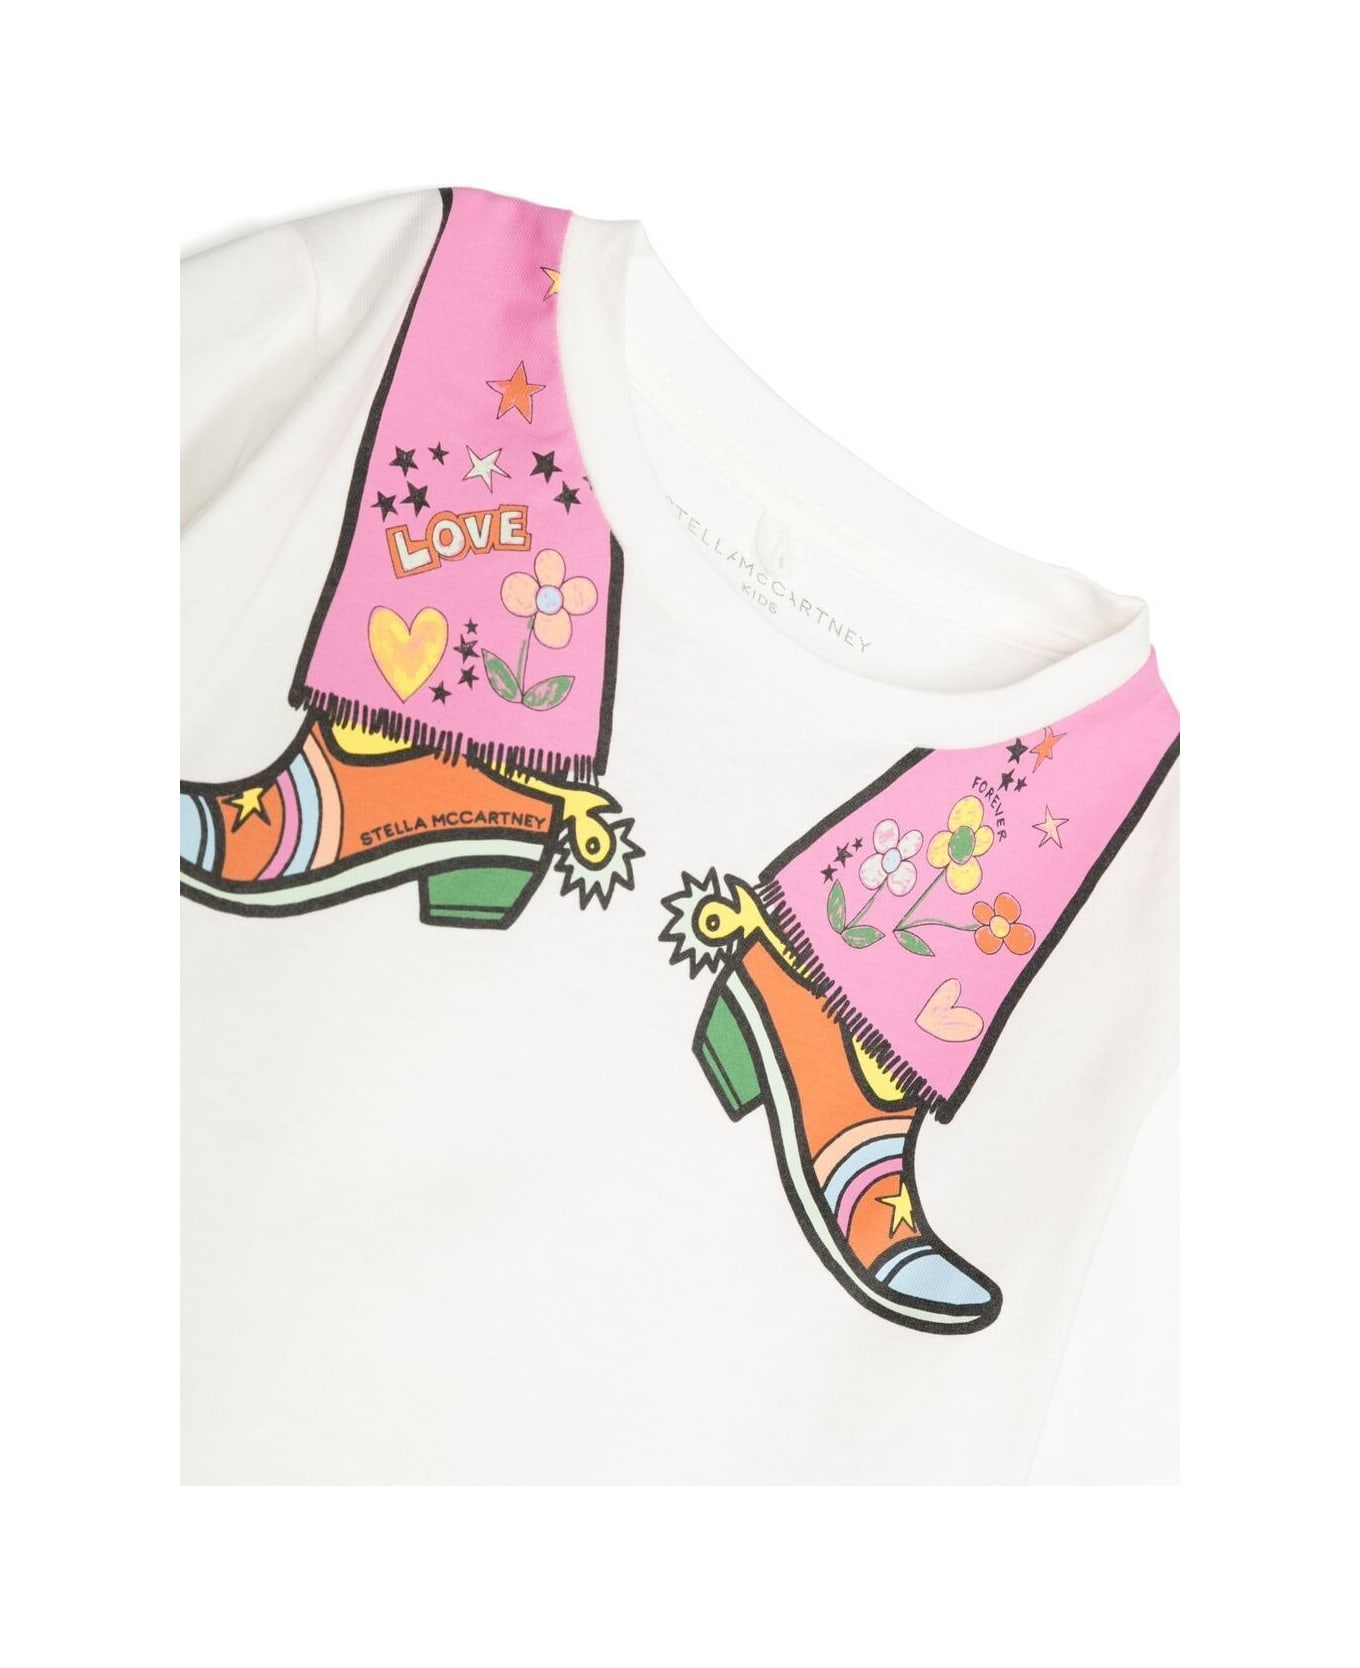 Stella McCartney Kids Crewneck T-shirt With Graphic Print In White Cotton Girl - White